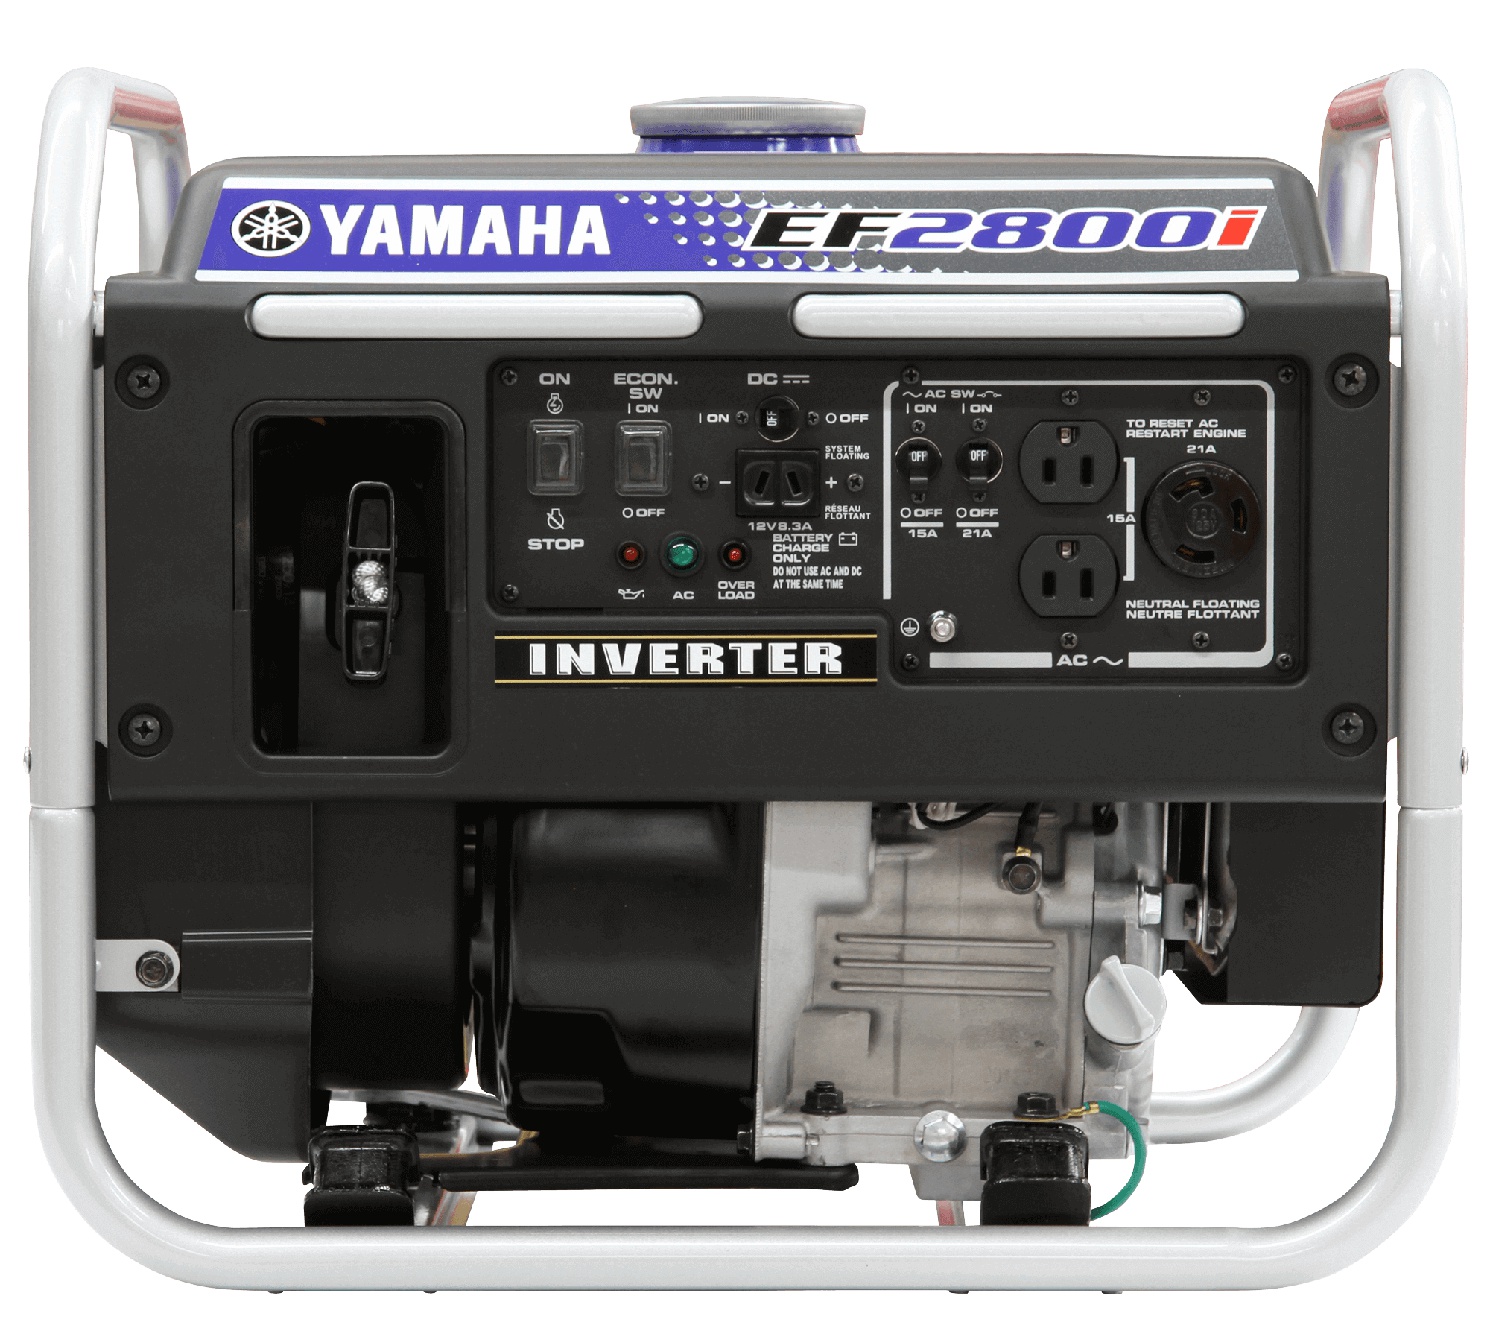  Yamaha Inverter Series EF2800I